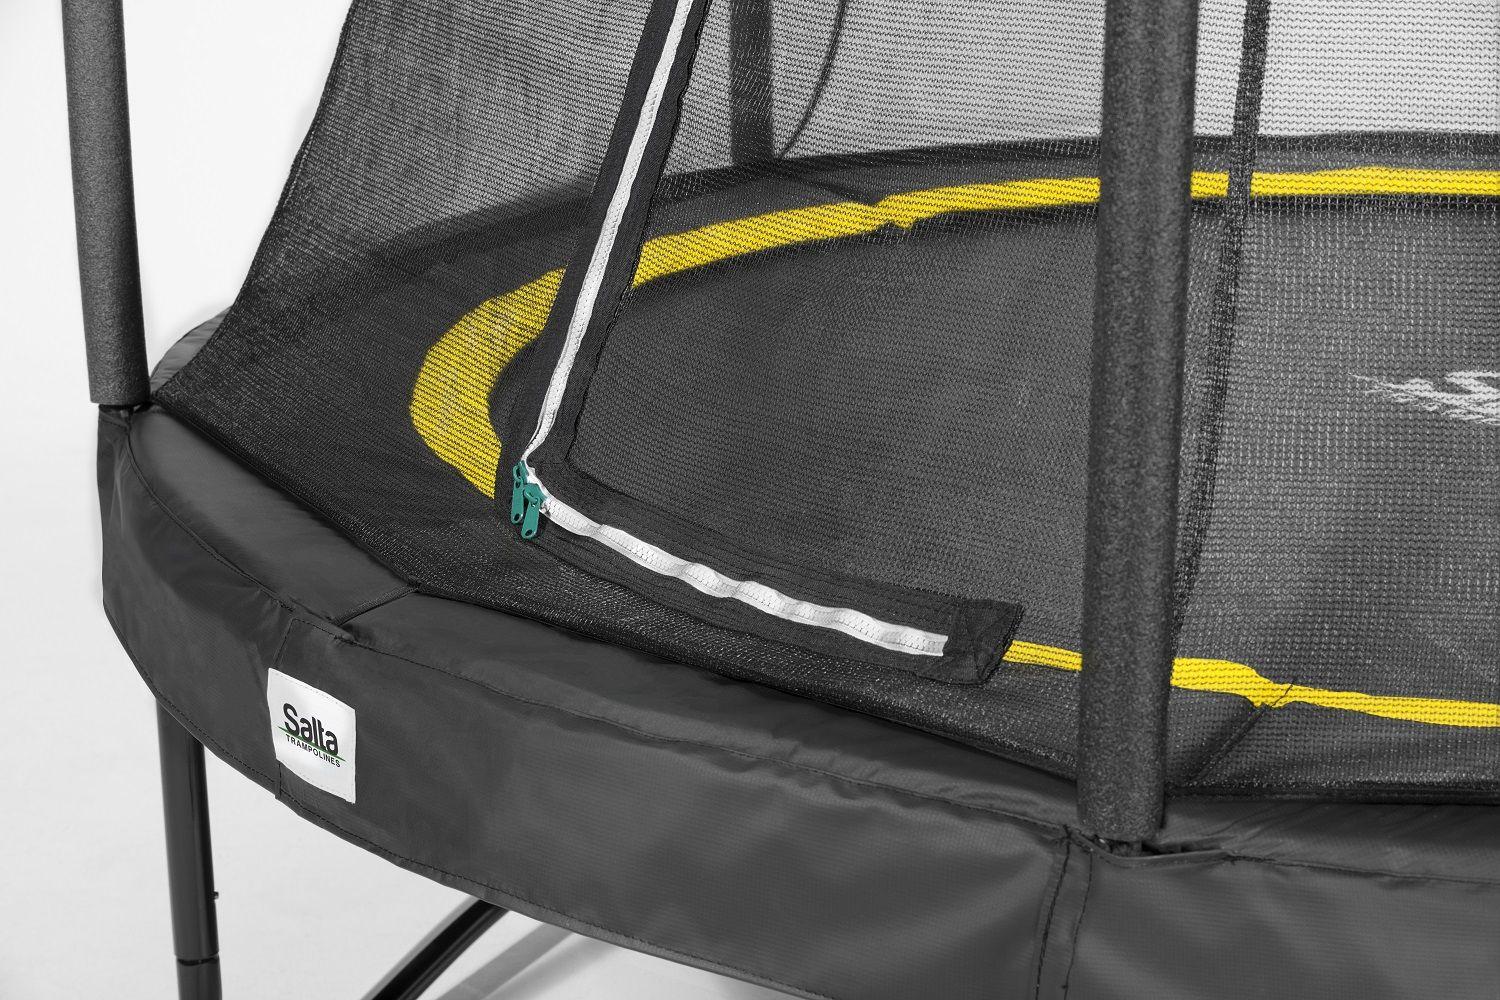 Salta Comfrot edition - 183 cm recreational/backyard trampoline